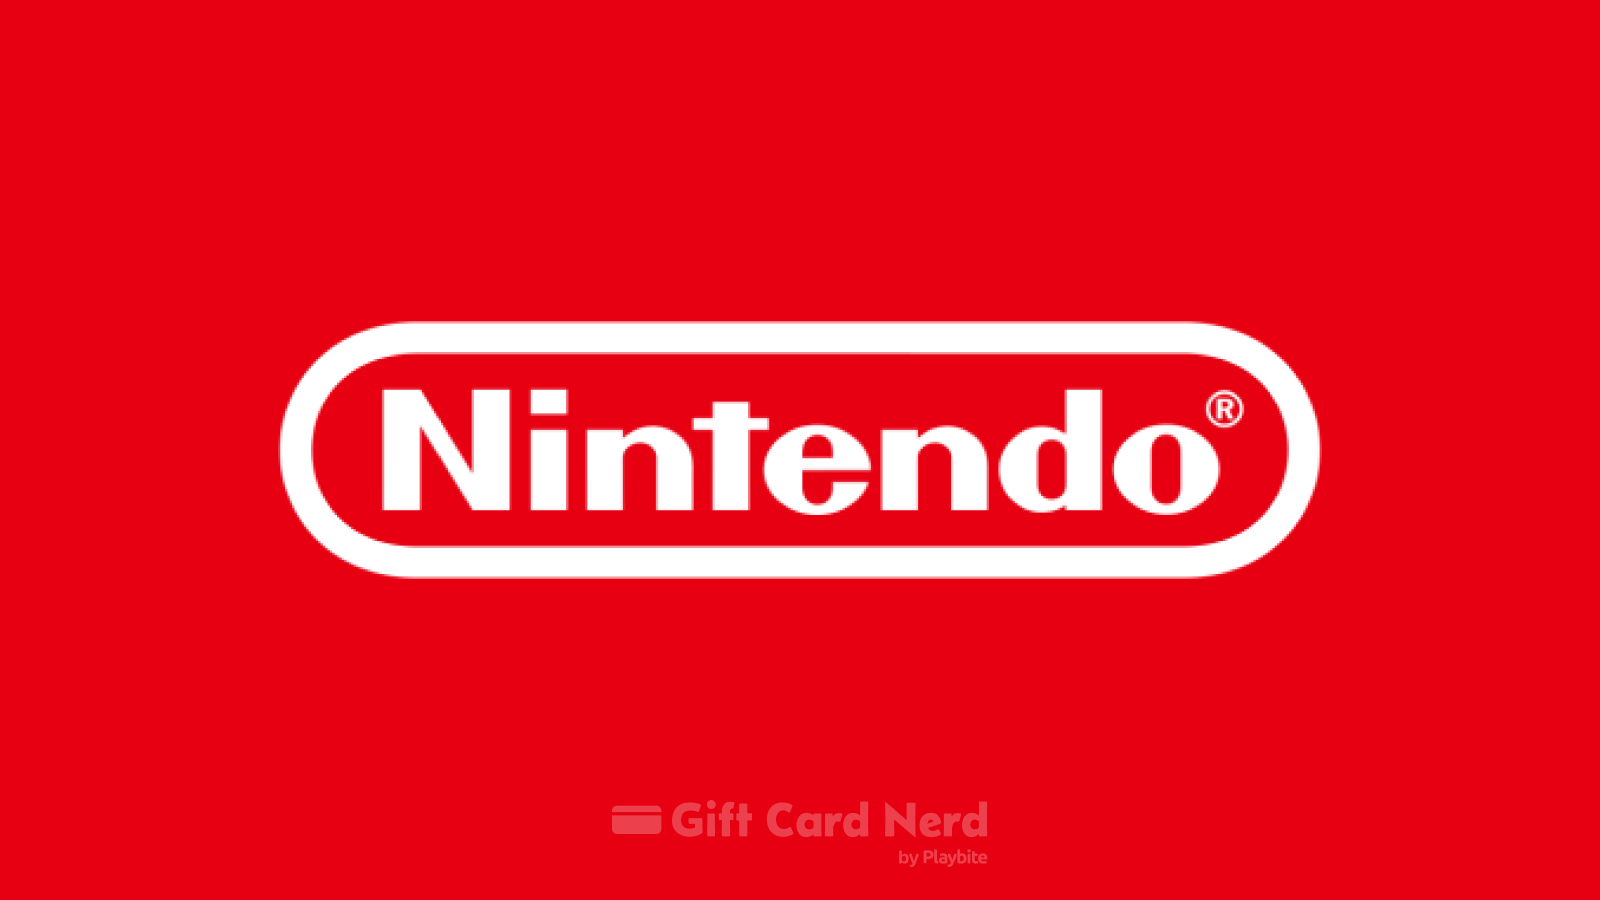 Can I Use a Nintendo Gift Card on Grubhub?